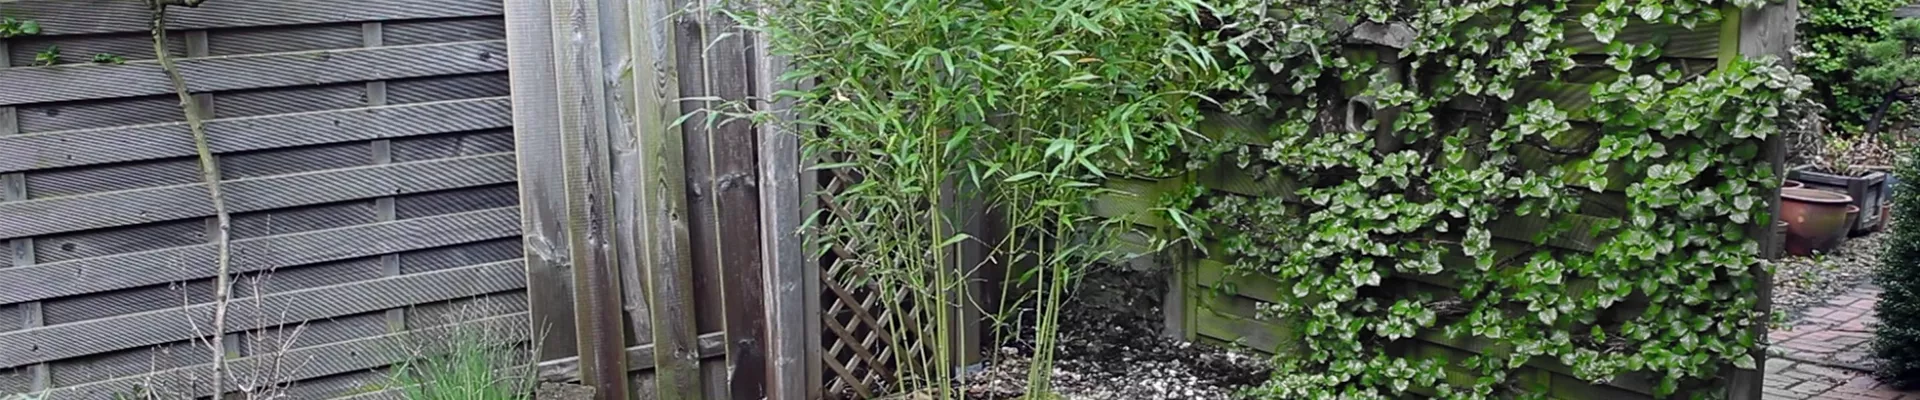 Bambus - Einpflanzen im Garten (thumbnail).jpg